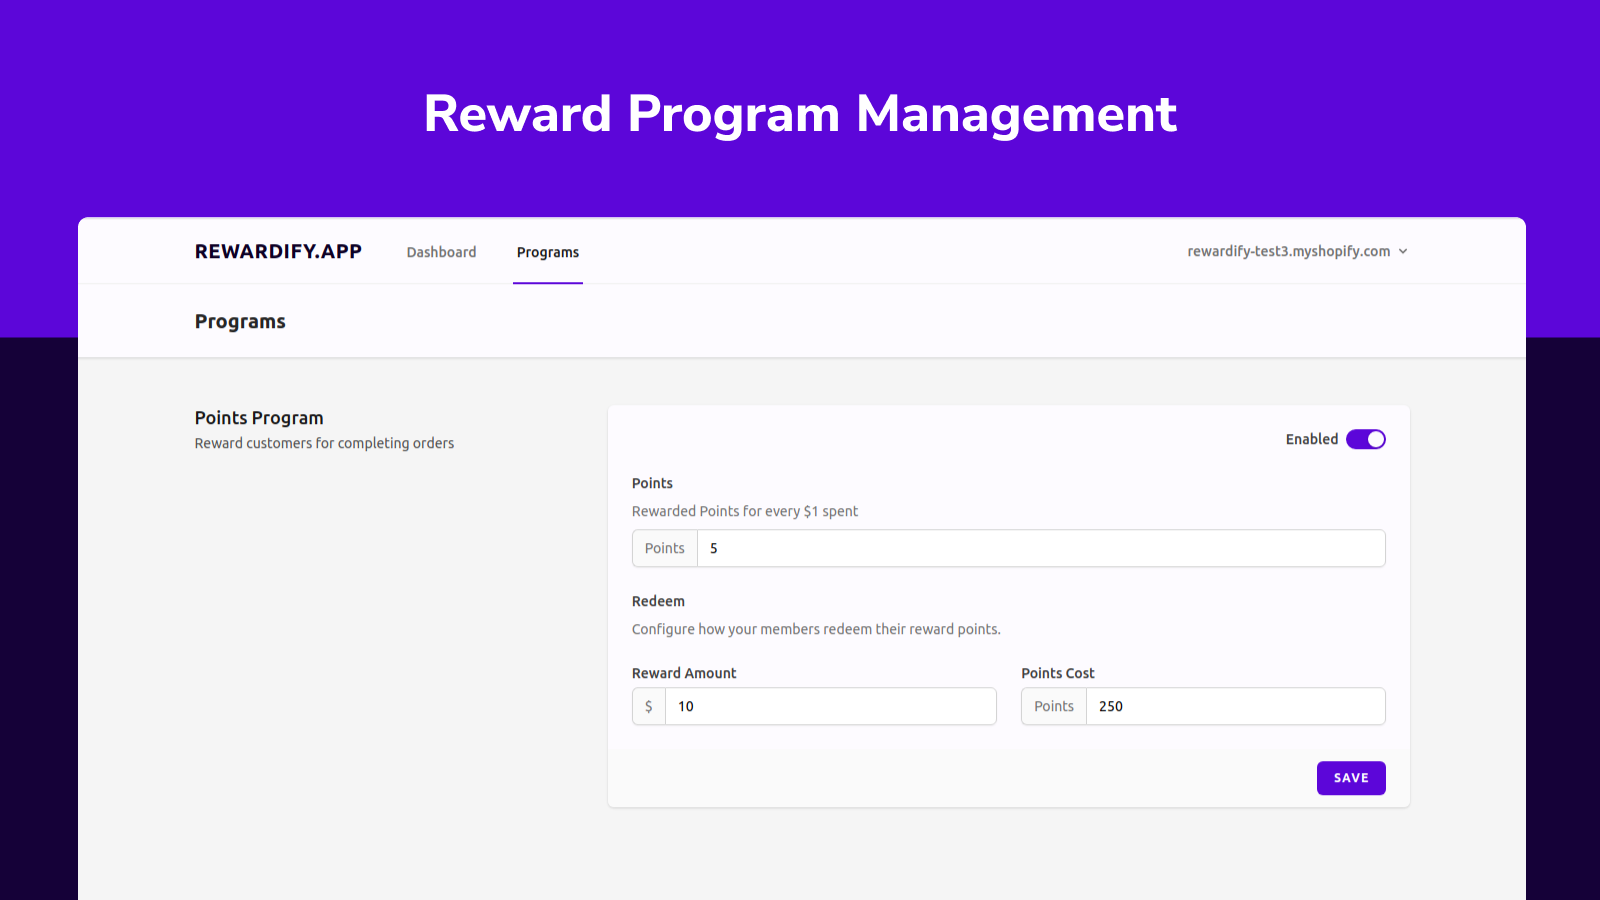 Reward Program Management